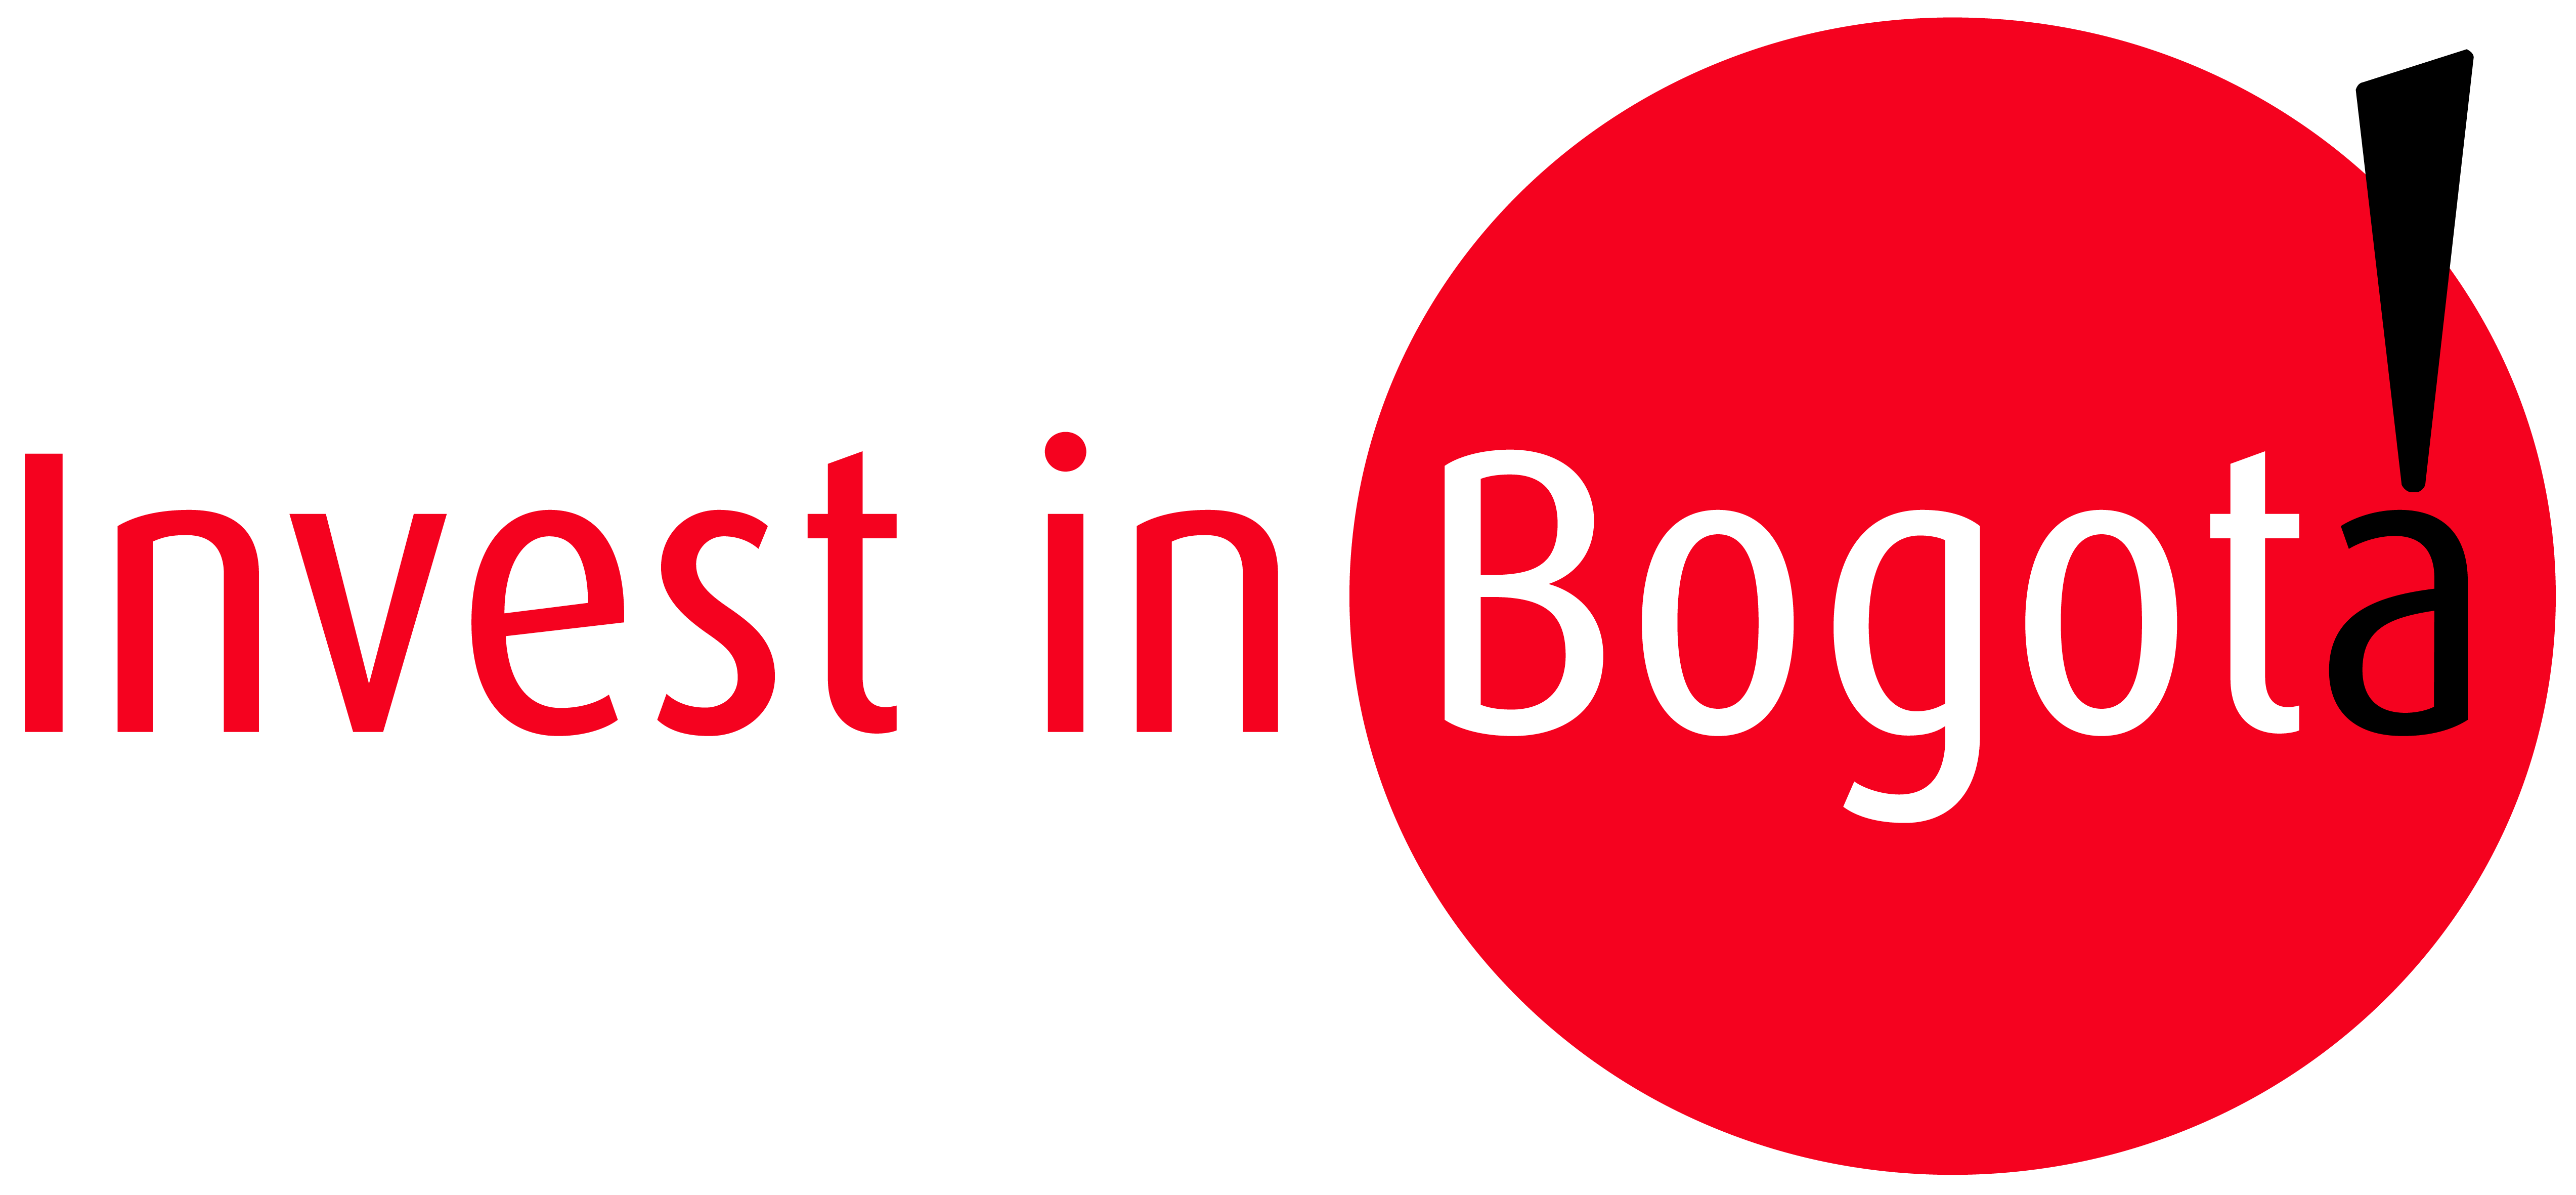 logo-invest-in-bogota